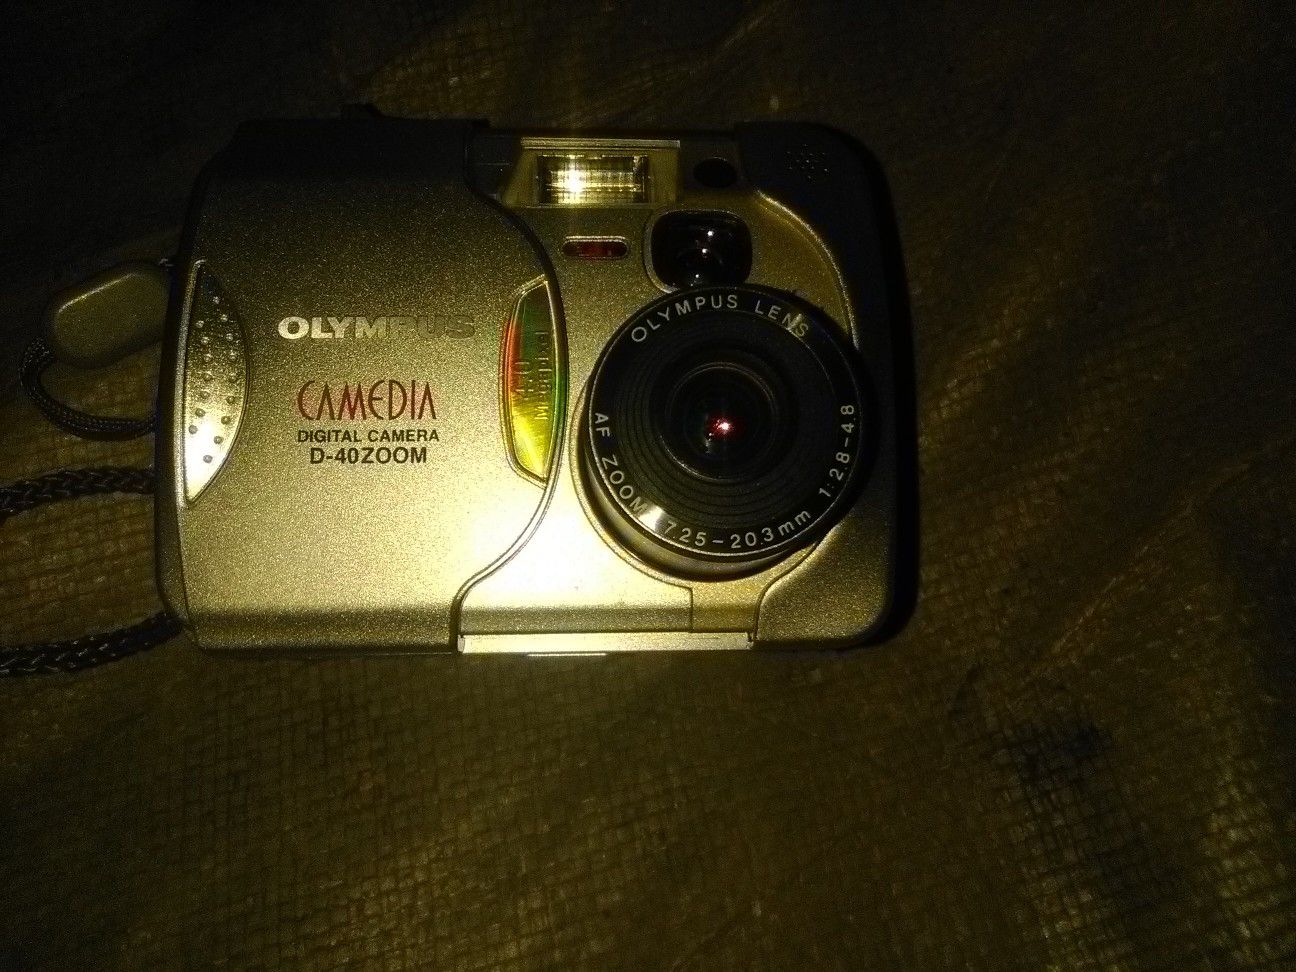 Olympus digital camera with 40x zoom lens